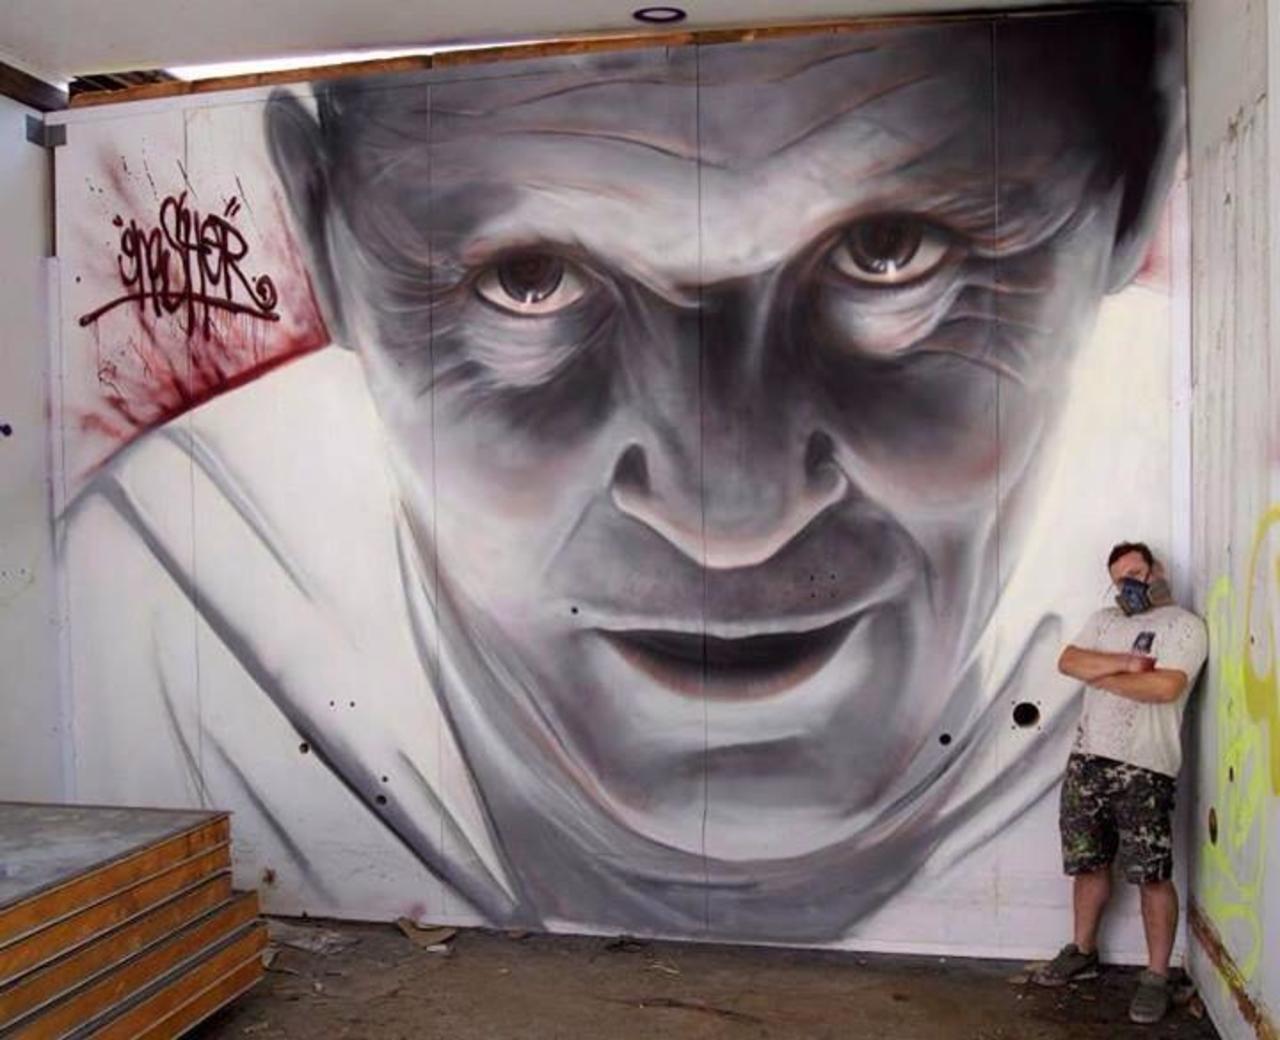 RT @designopinion: Artist @GnasherMurals new awesome Street Art portrait of Hannibal Lector #art #graffiti #mural #streetart http://t.co/lZuxdkKS4h